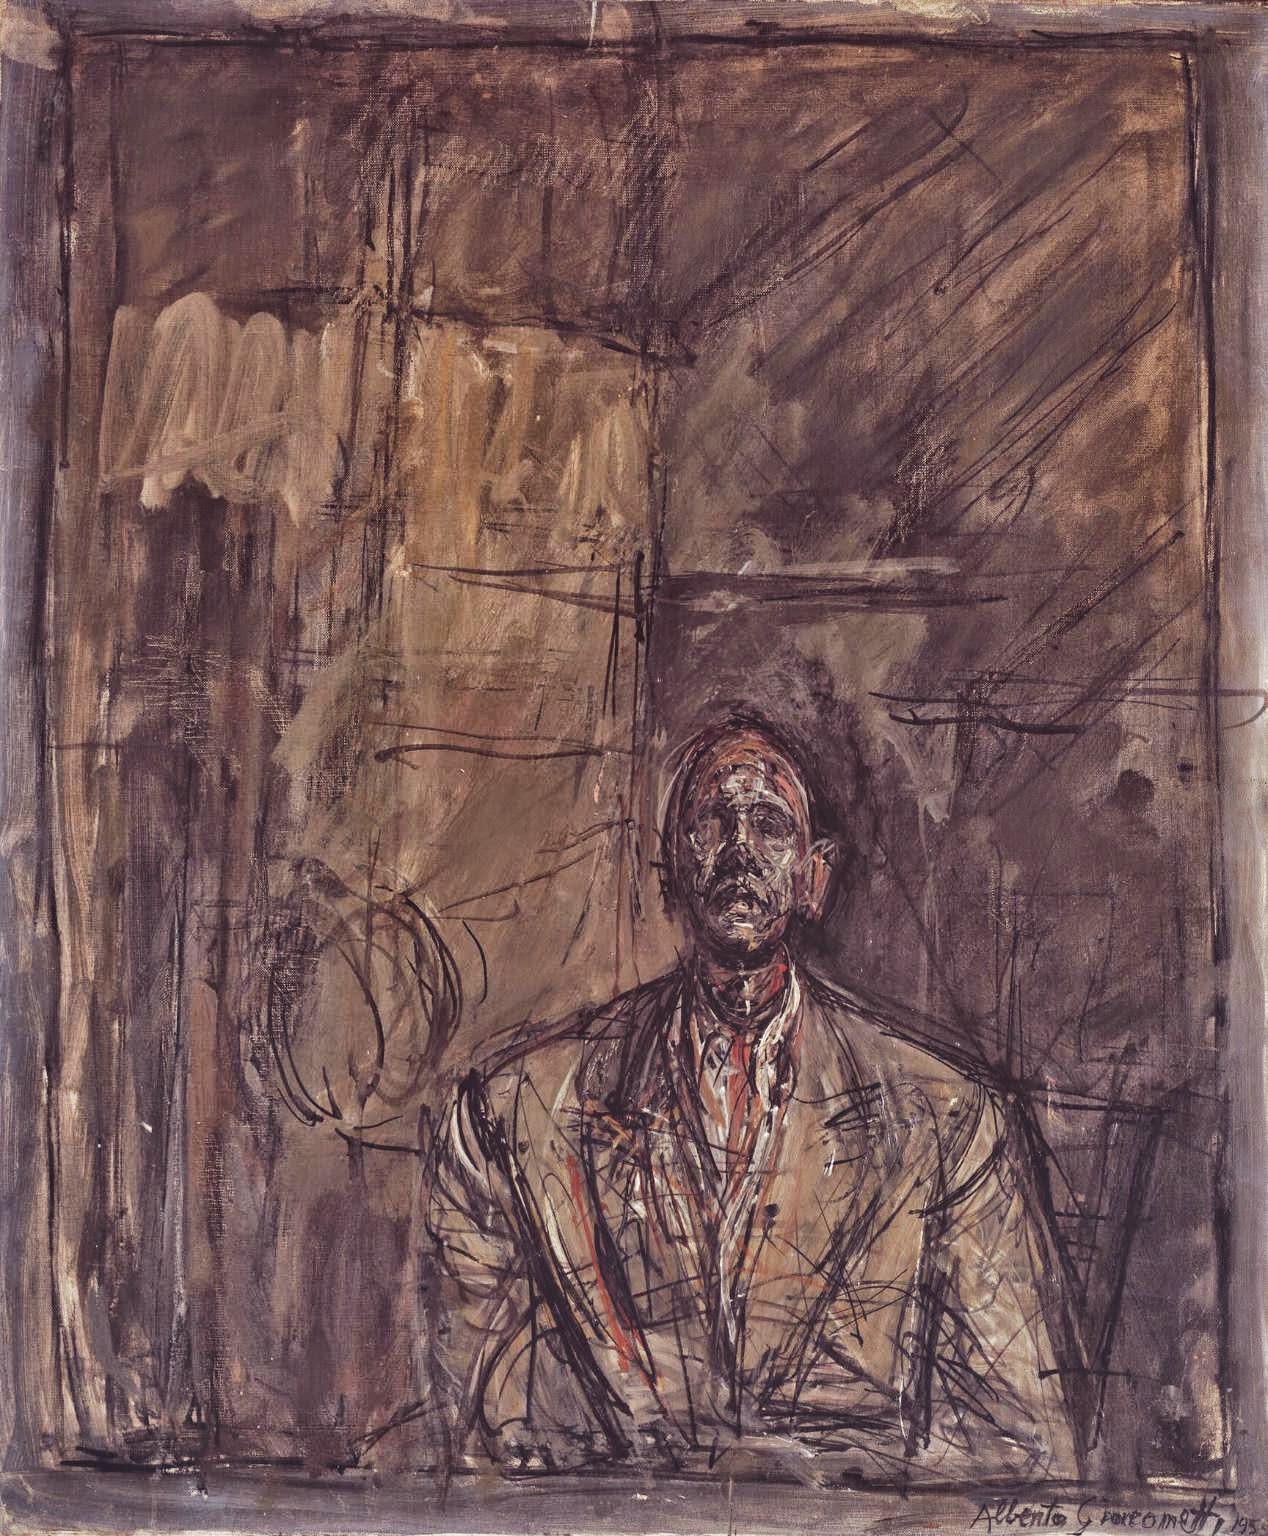 Alberto+Giacometti-1901-1966 (67).jpg